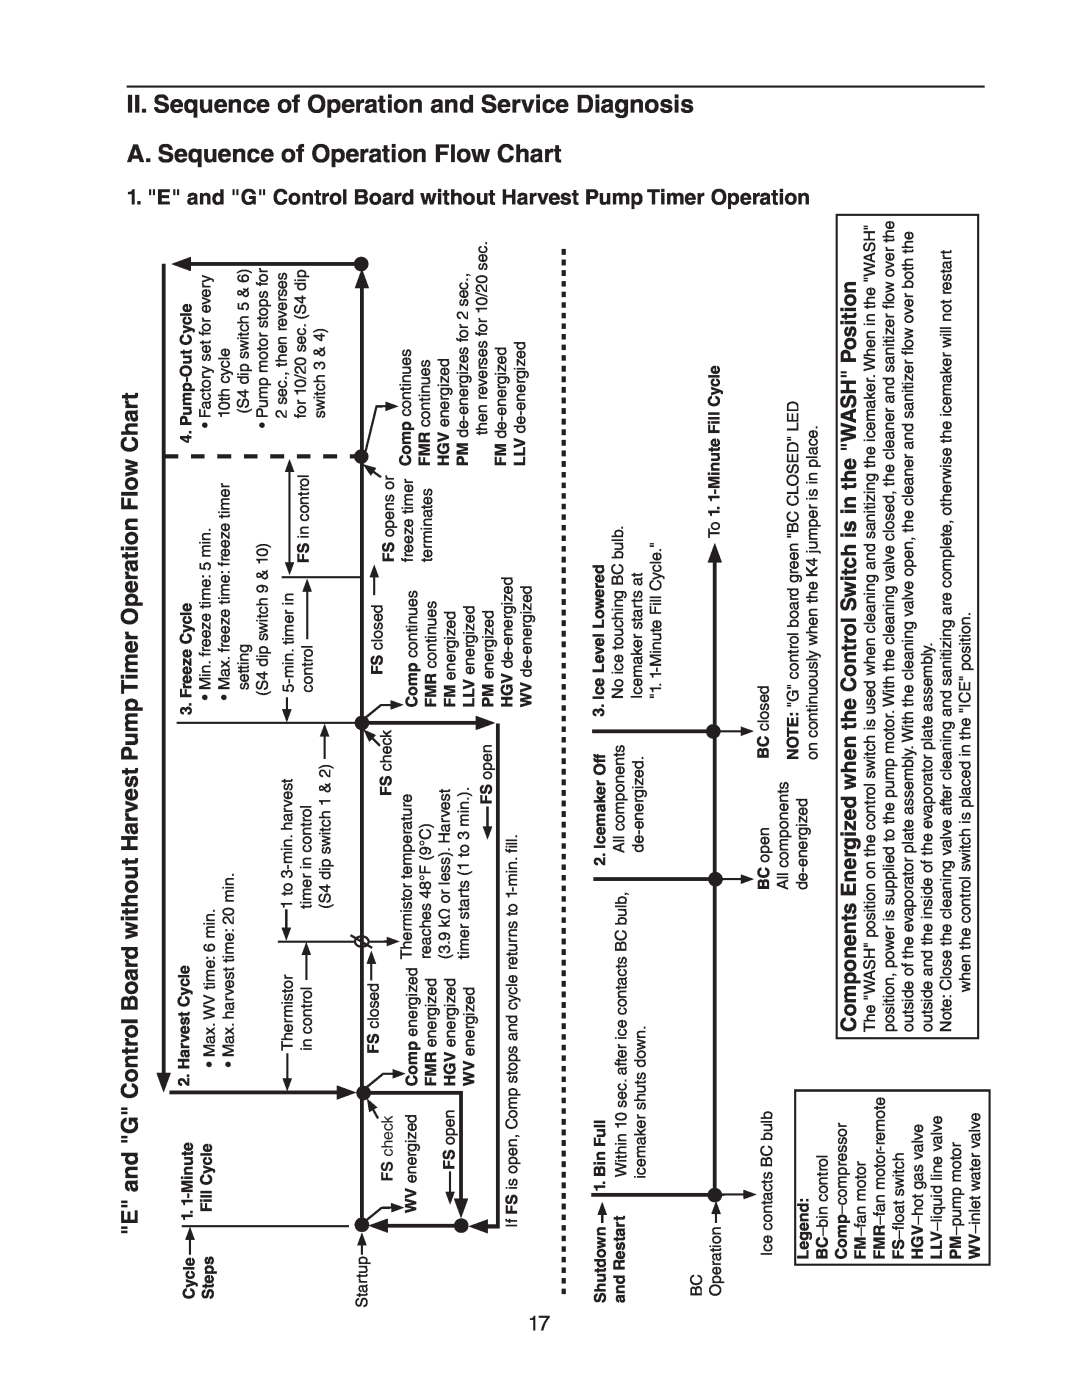 Hoshizaki SRH/3 KM-1900SAH/3, SWH/3 A. Sequence of Operation Flow Chart, II. Sequence of Operation and Service Diagnosis 